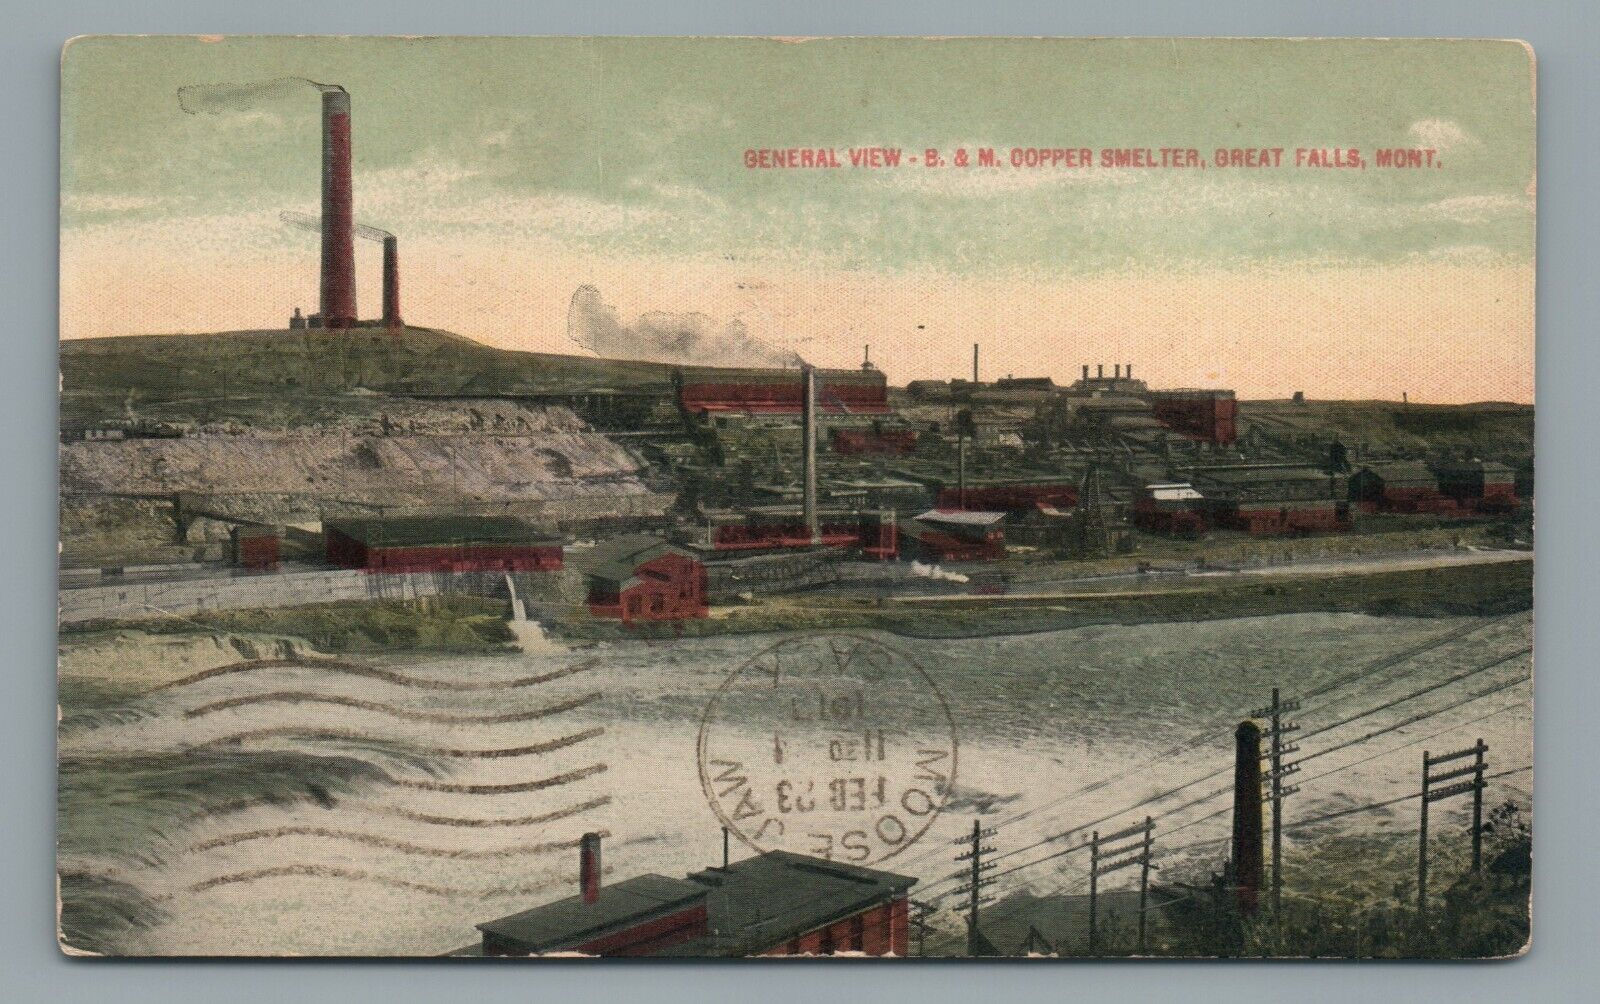 B&M Copper Smelter Great Falls Montana MT  Vintage Postcard Posted 1913